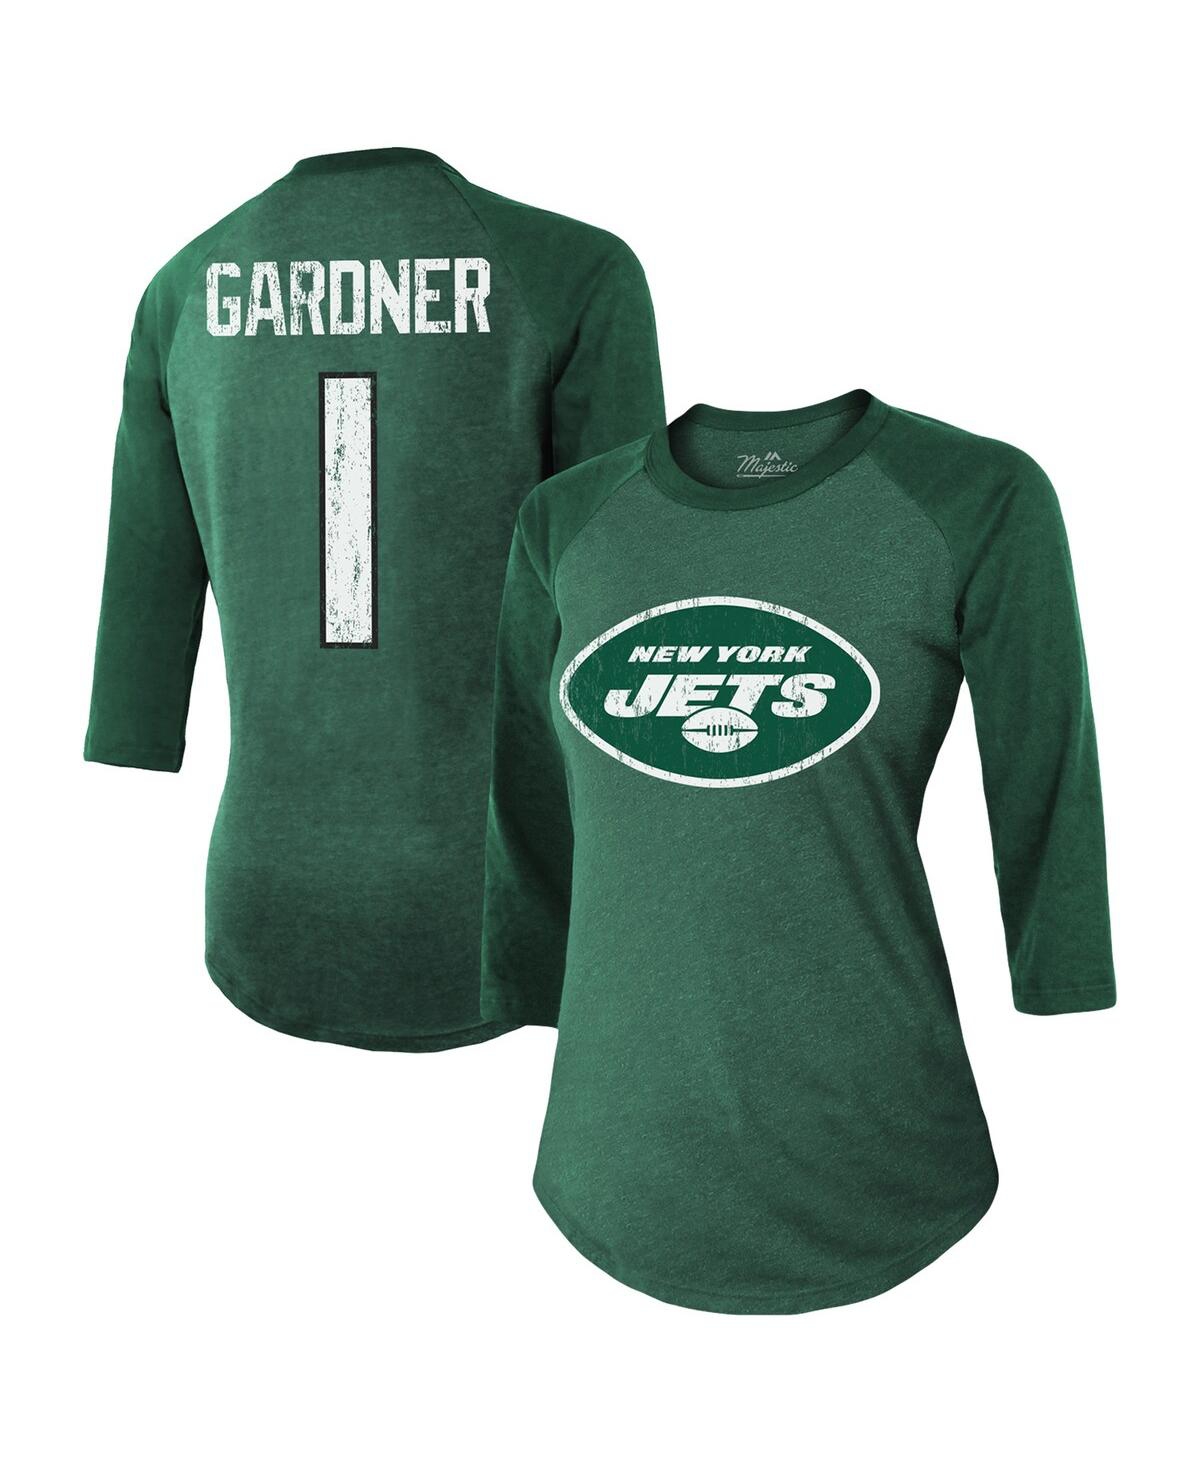 Women's Majestic Threads Ahmad Sauce Gardner Green New York Jets Player Name and Number Tri-Blend Raglan 3/4-Sleeve T-shirt - Green